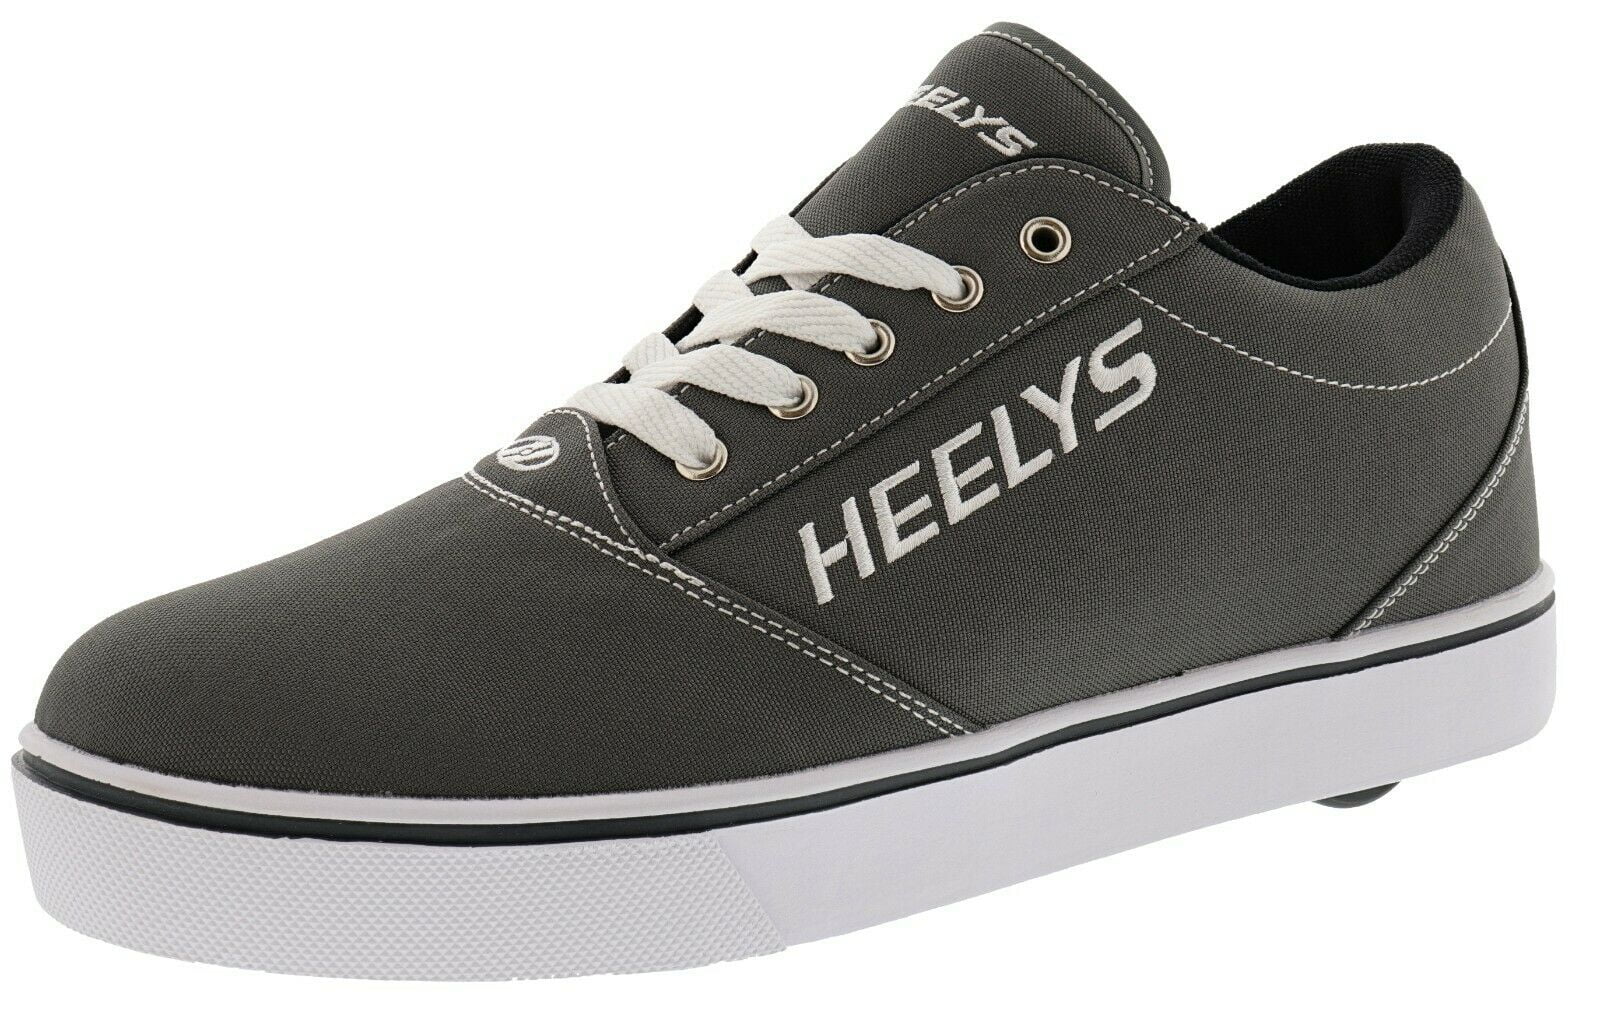 Heelys HEELYS-SIZE-UK-3-TRAINERS-WITH-REMOVABLE-WHEELS-SKATE-BLACK/BLUE/GREY 